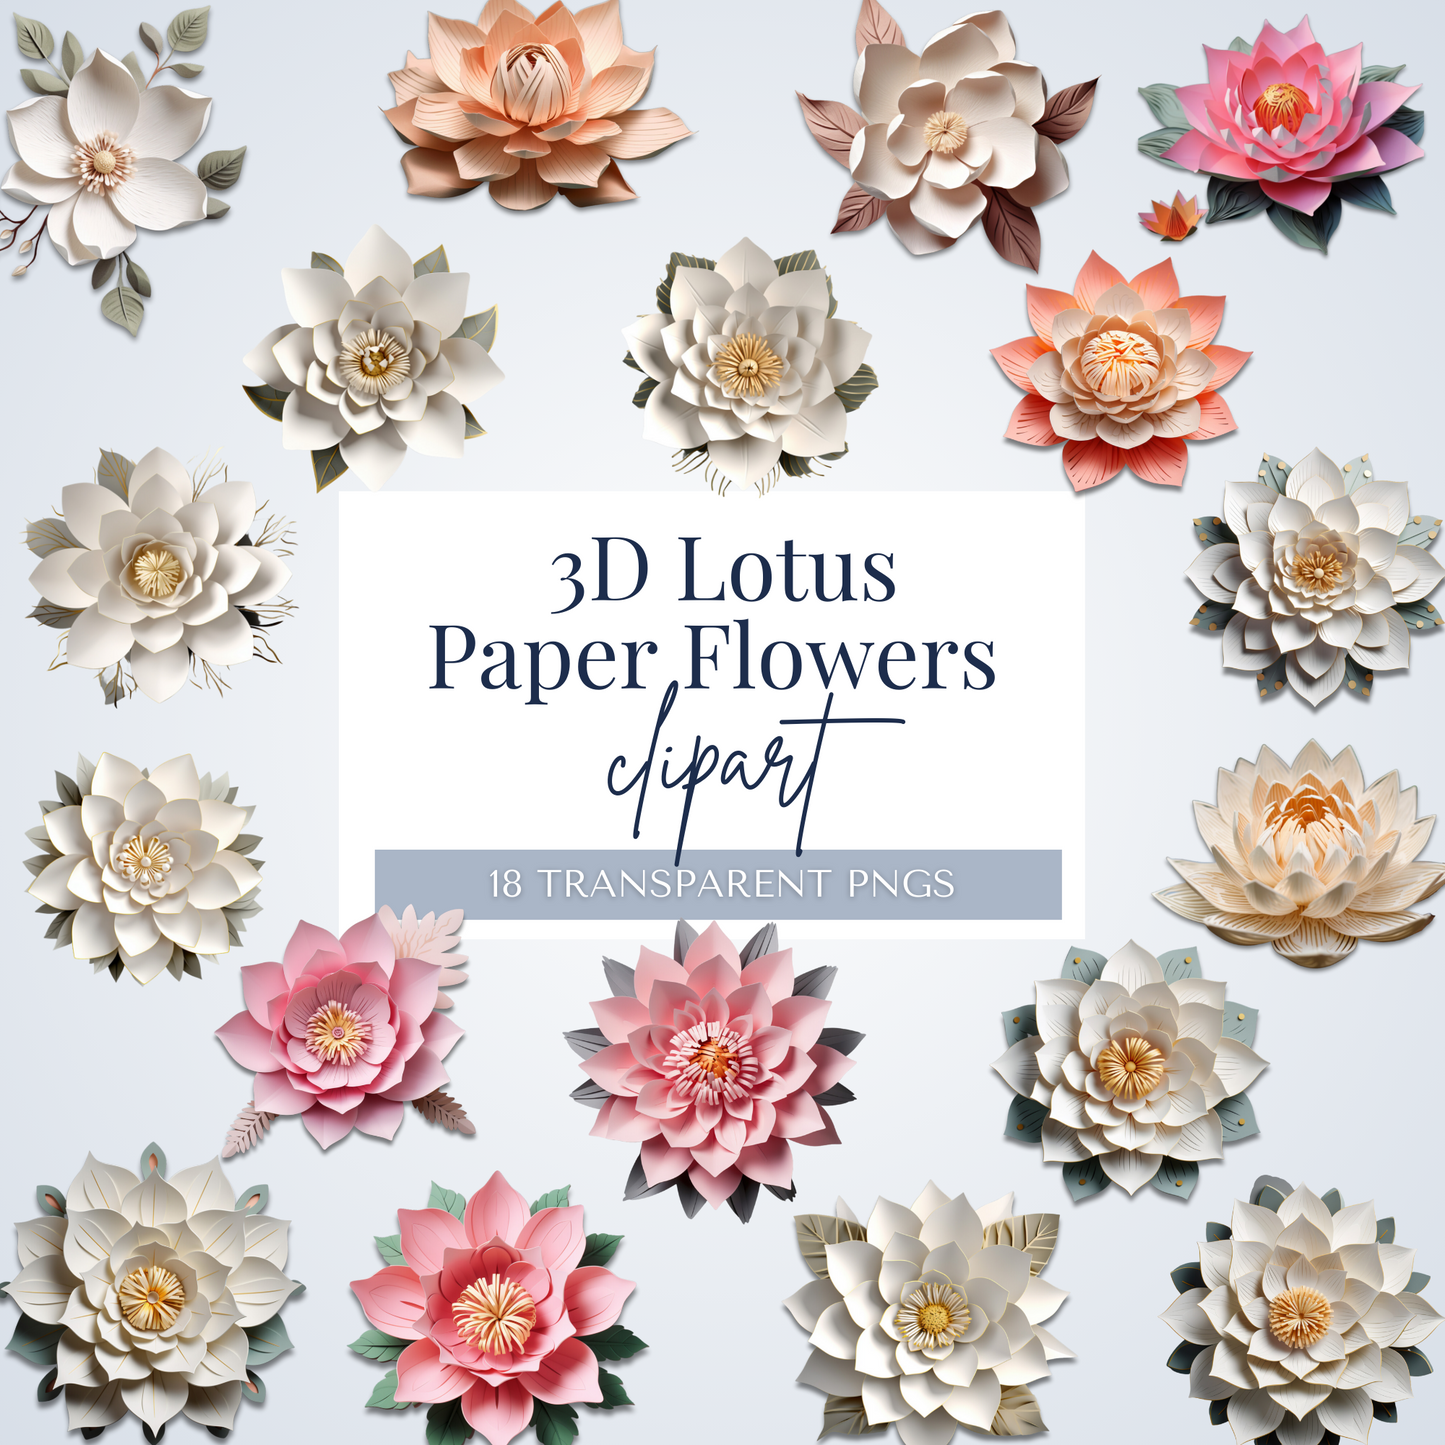 3D Lotus Paper Flower Clipart | 18 PNGs